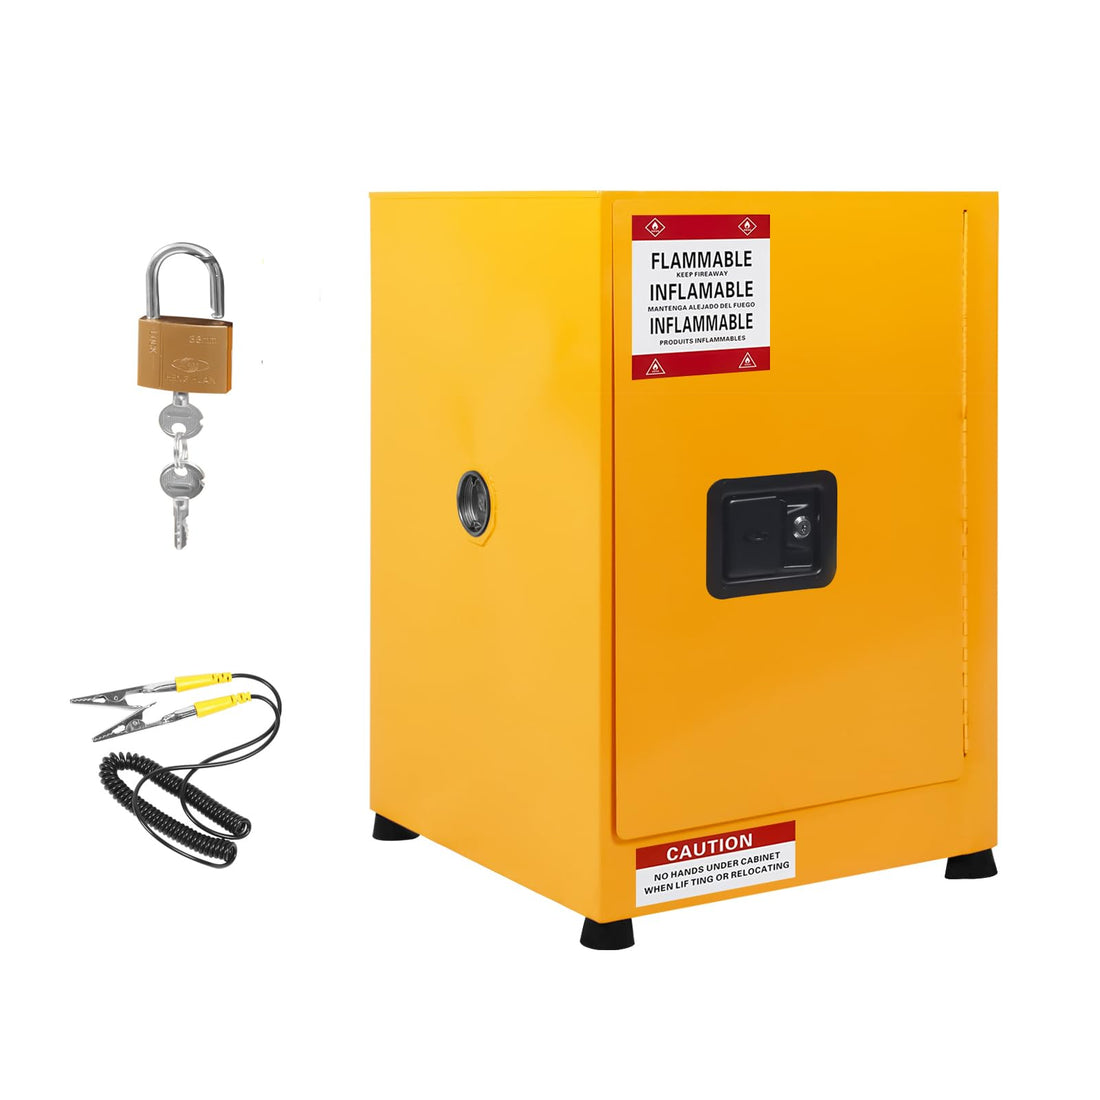 17x17x22" Galvanized Steel Flammable Storage Cabinet, Yellow